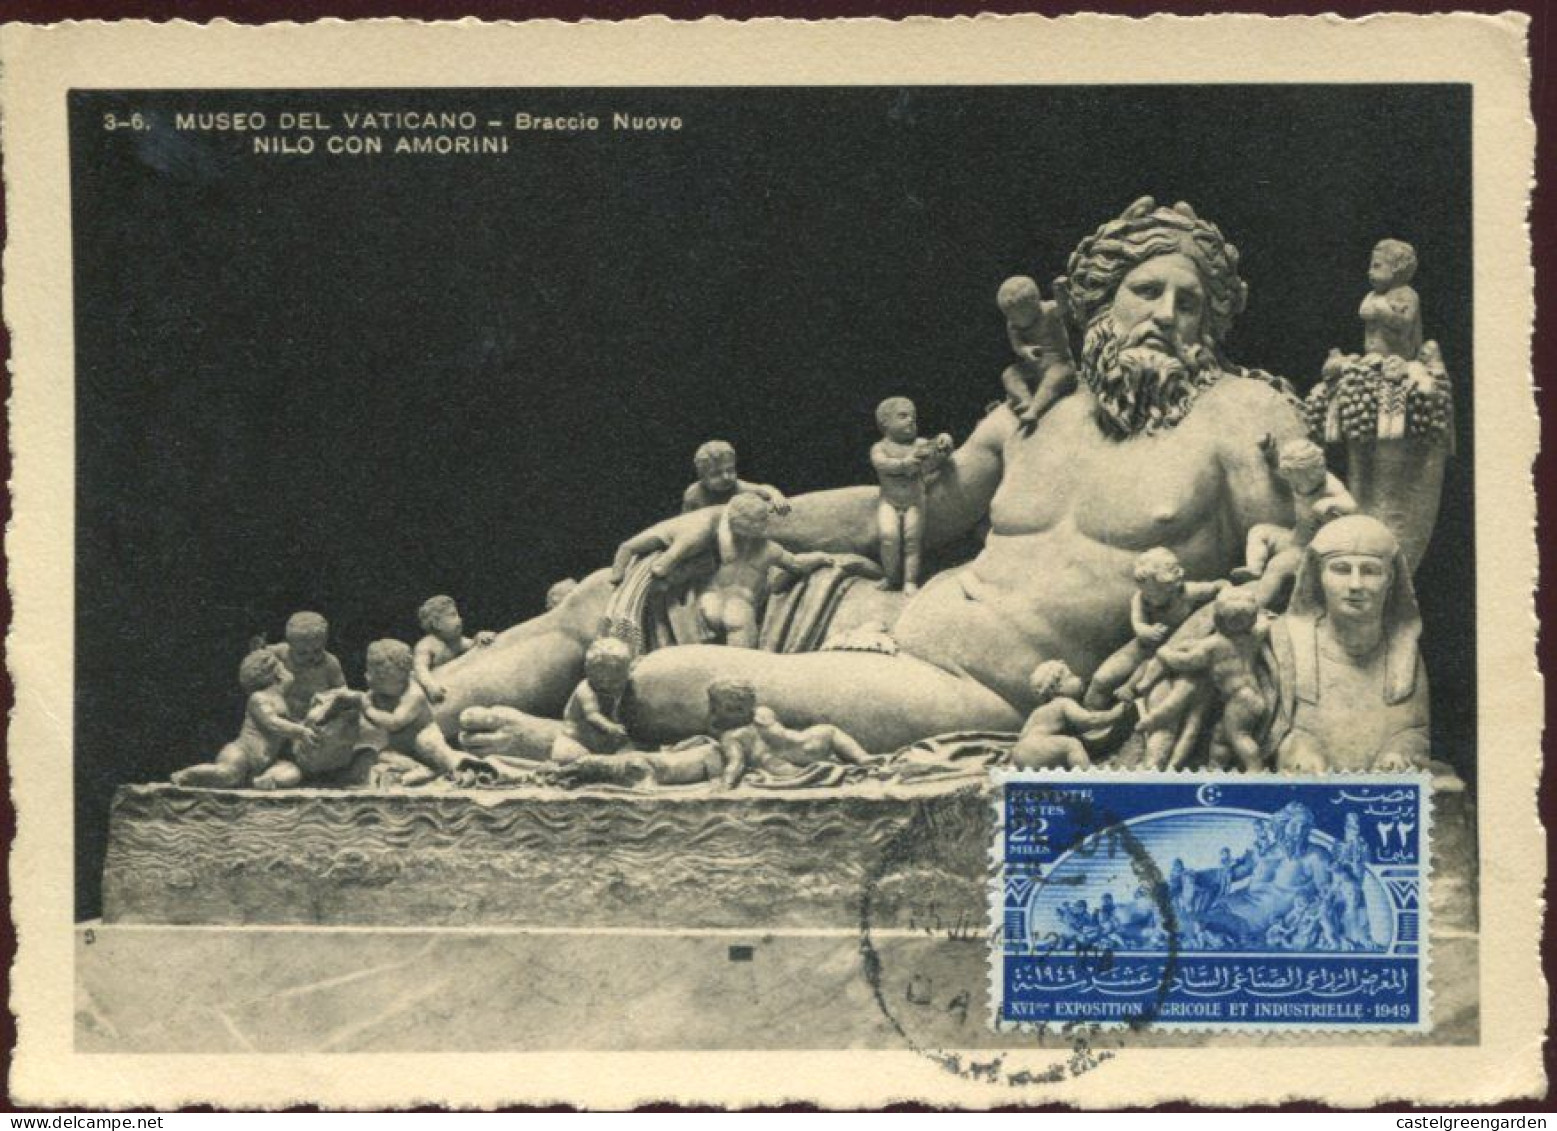 X0507 Egypt,maximum Card 1949 Agricoltural Exhibition,showing The Sculpture Of God "NILO" Vintage Card - Archäologie